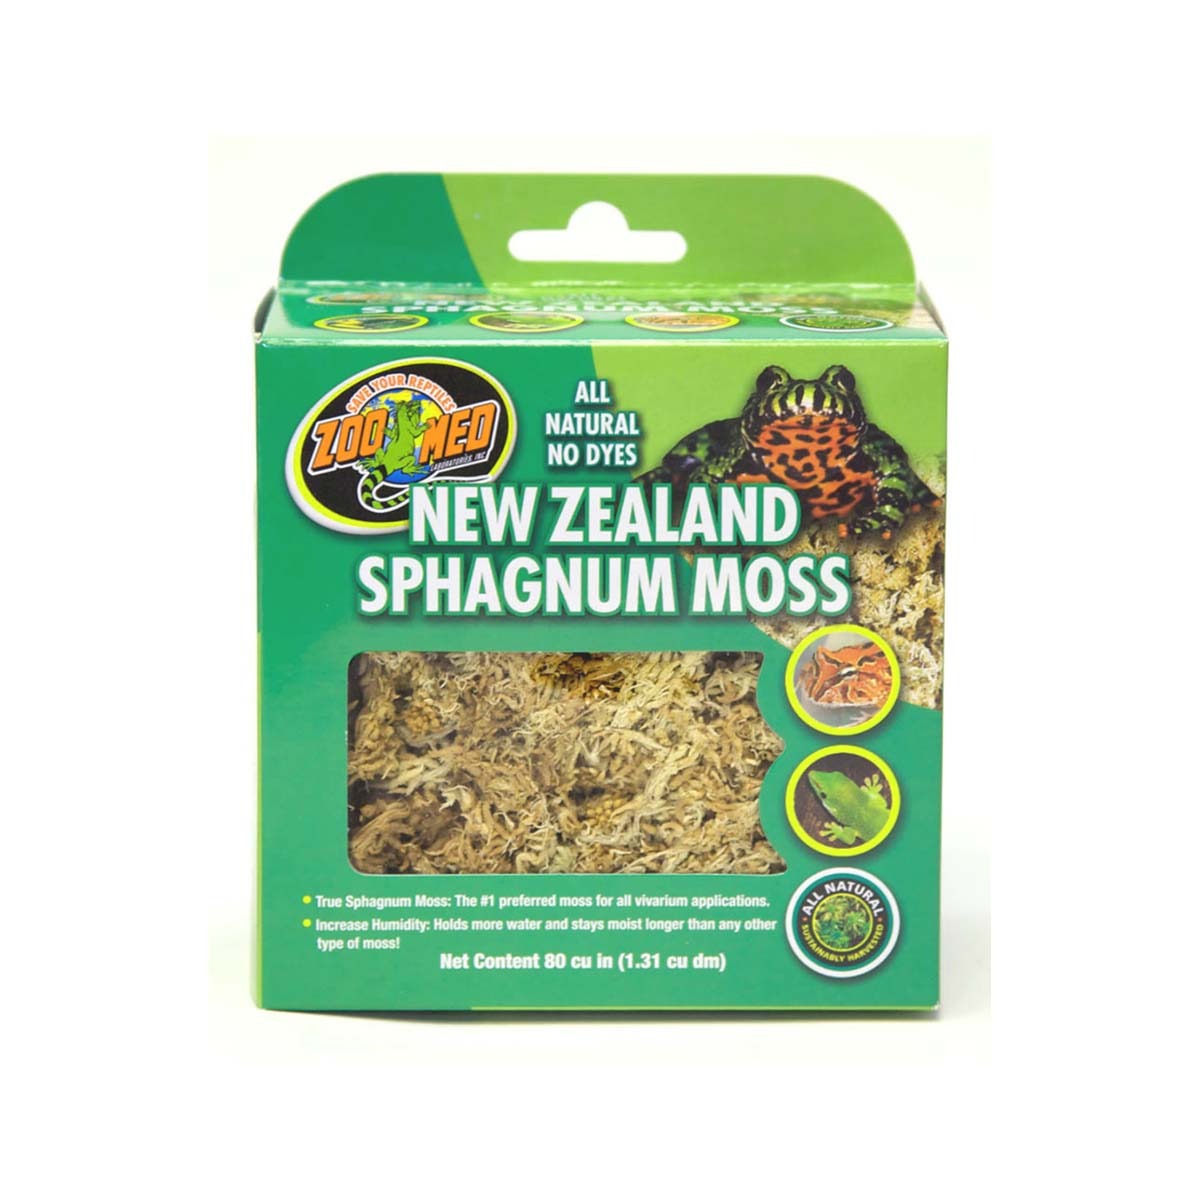  Peat Moss For Aquariums